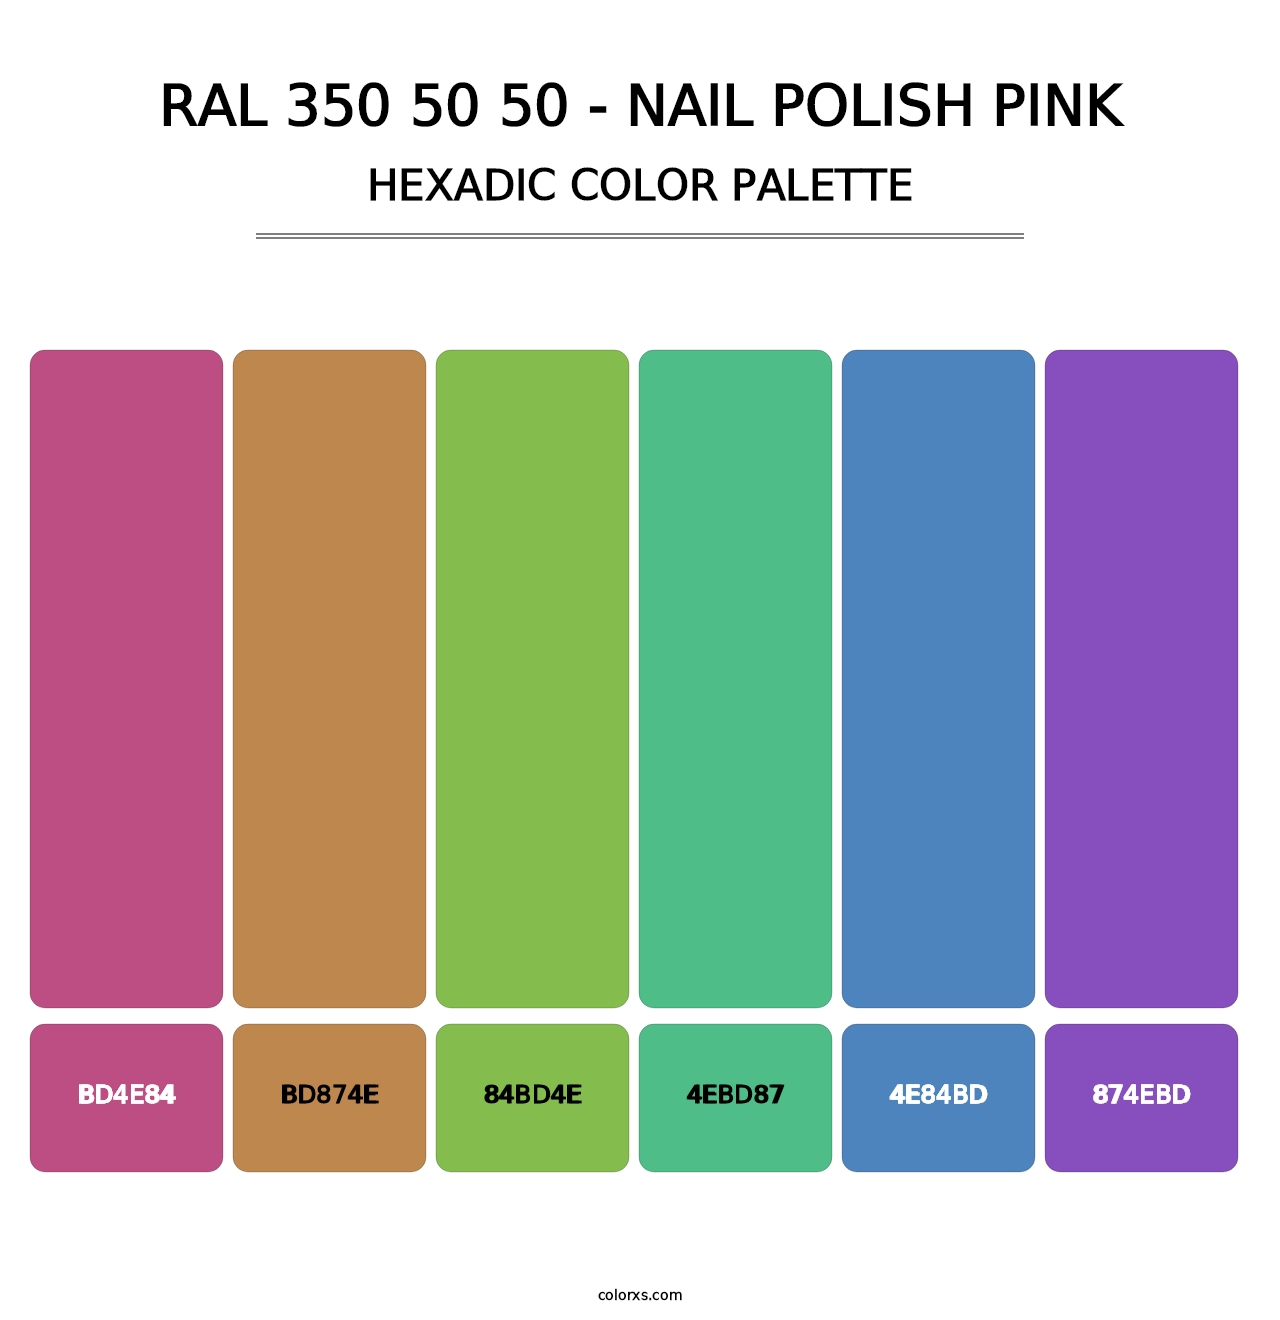 RAL 350 50 50 - Nail Polish Pink - Hexadic Color Palette